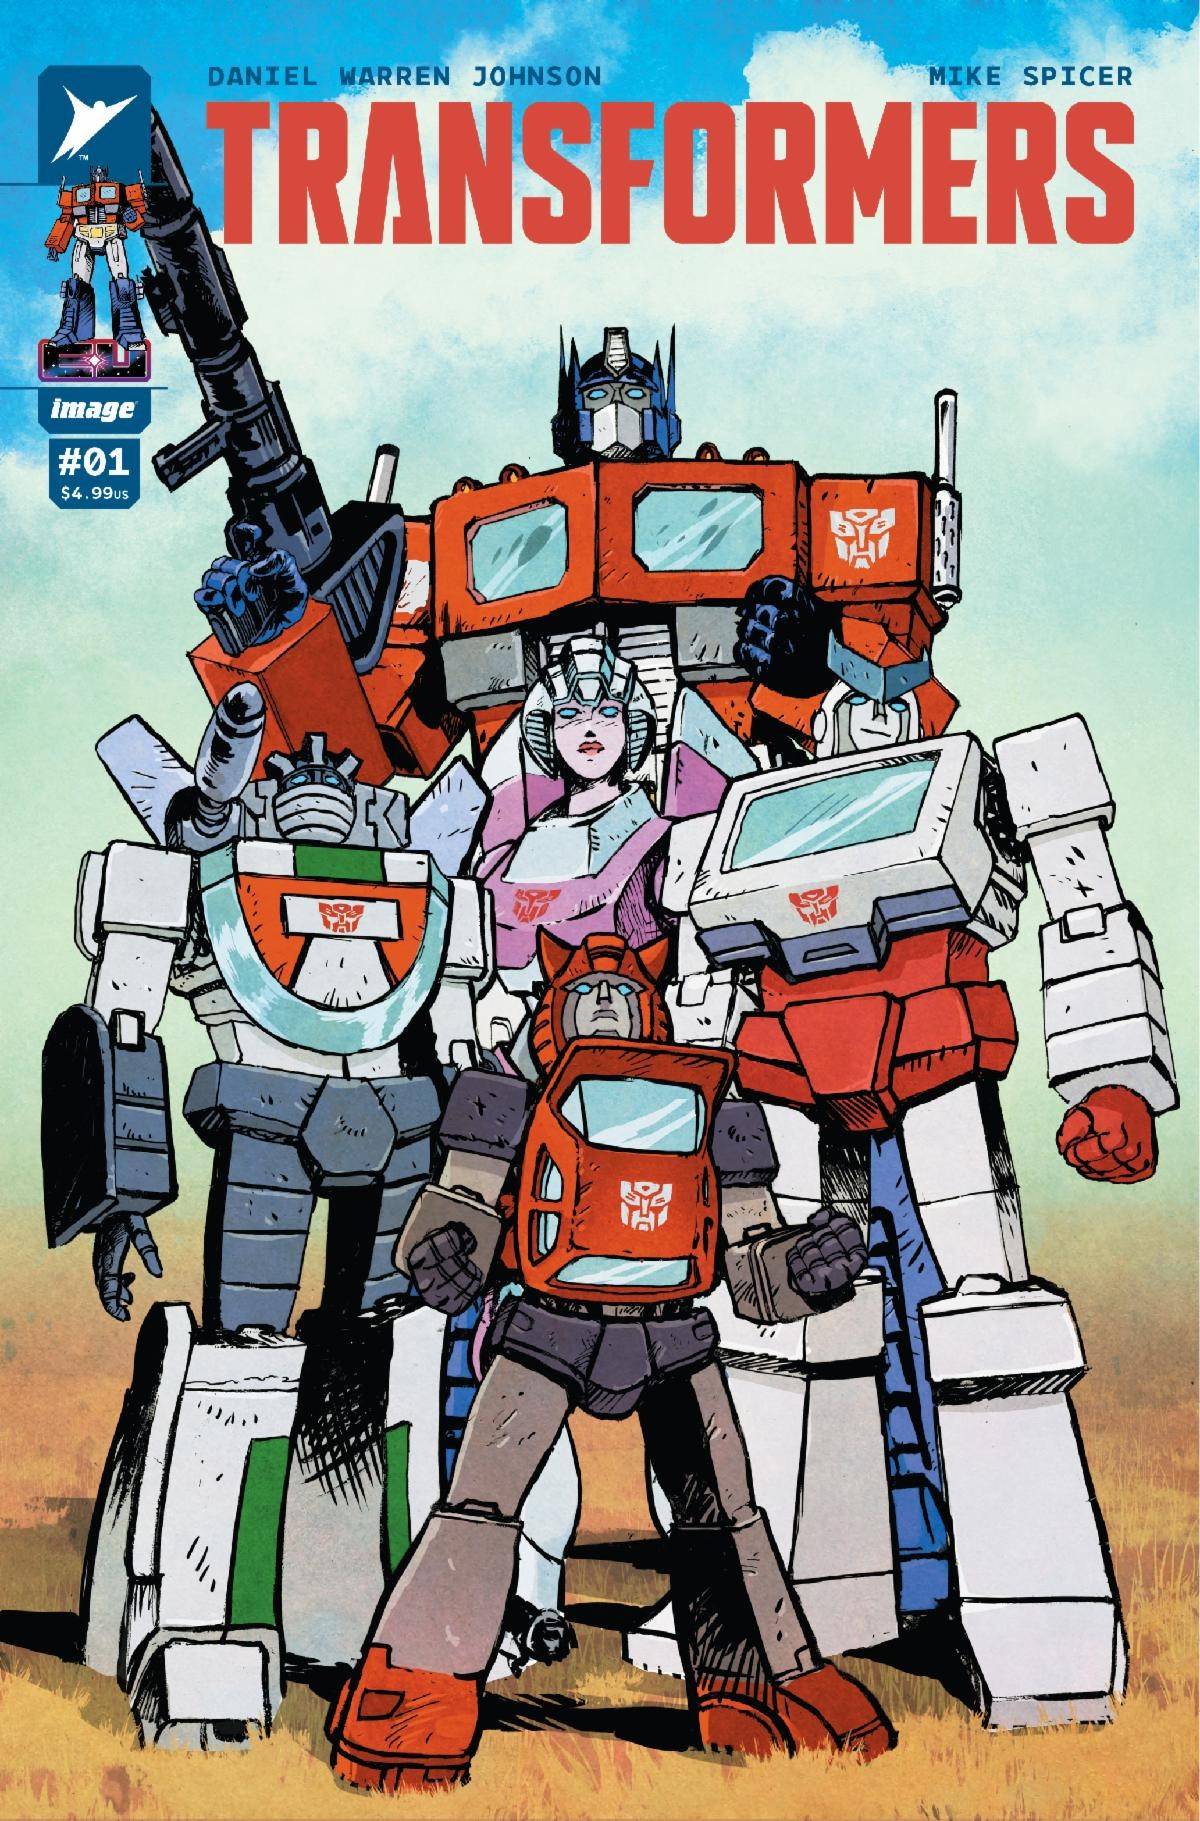 Transformers #1 Cover B Daniel Warren Johnson + Mike Spicer